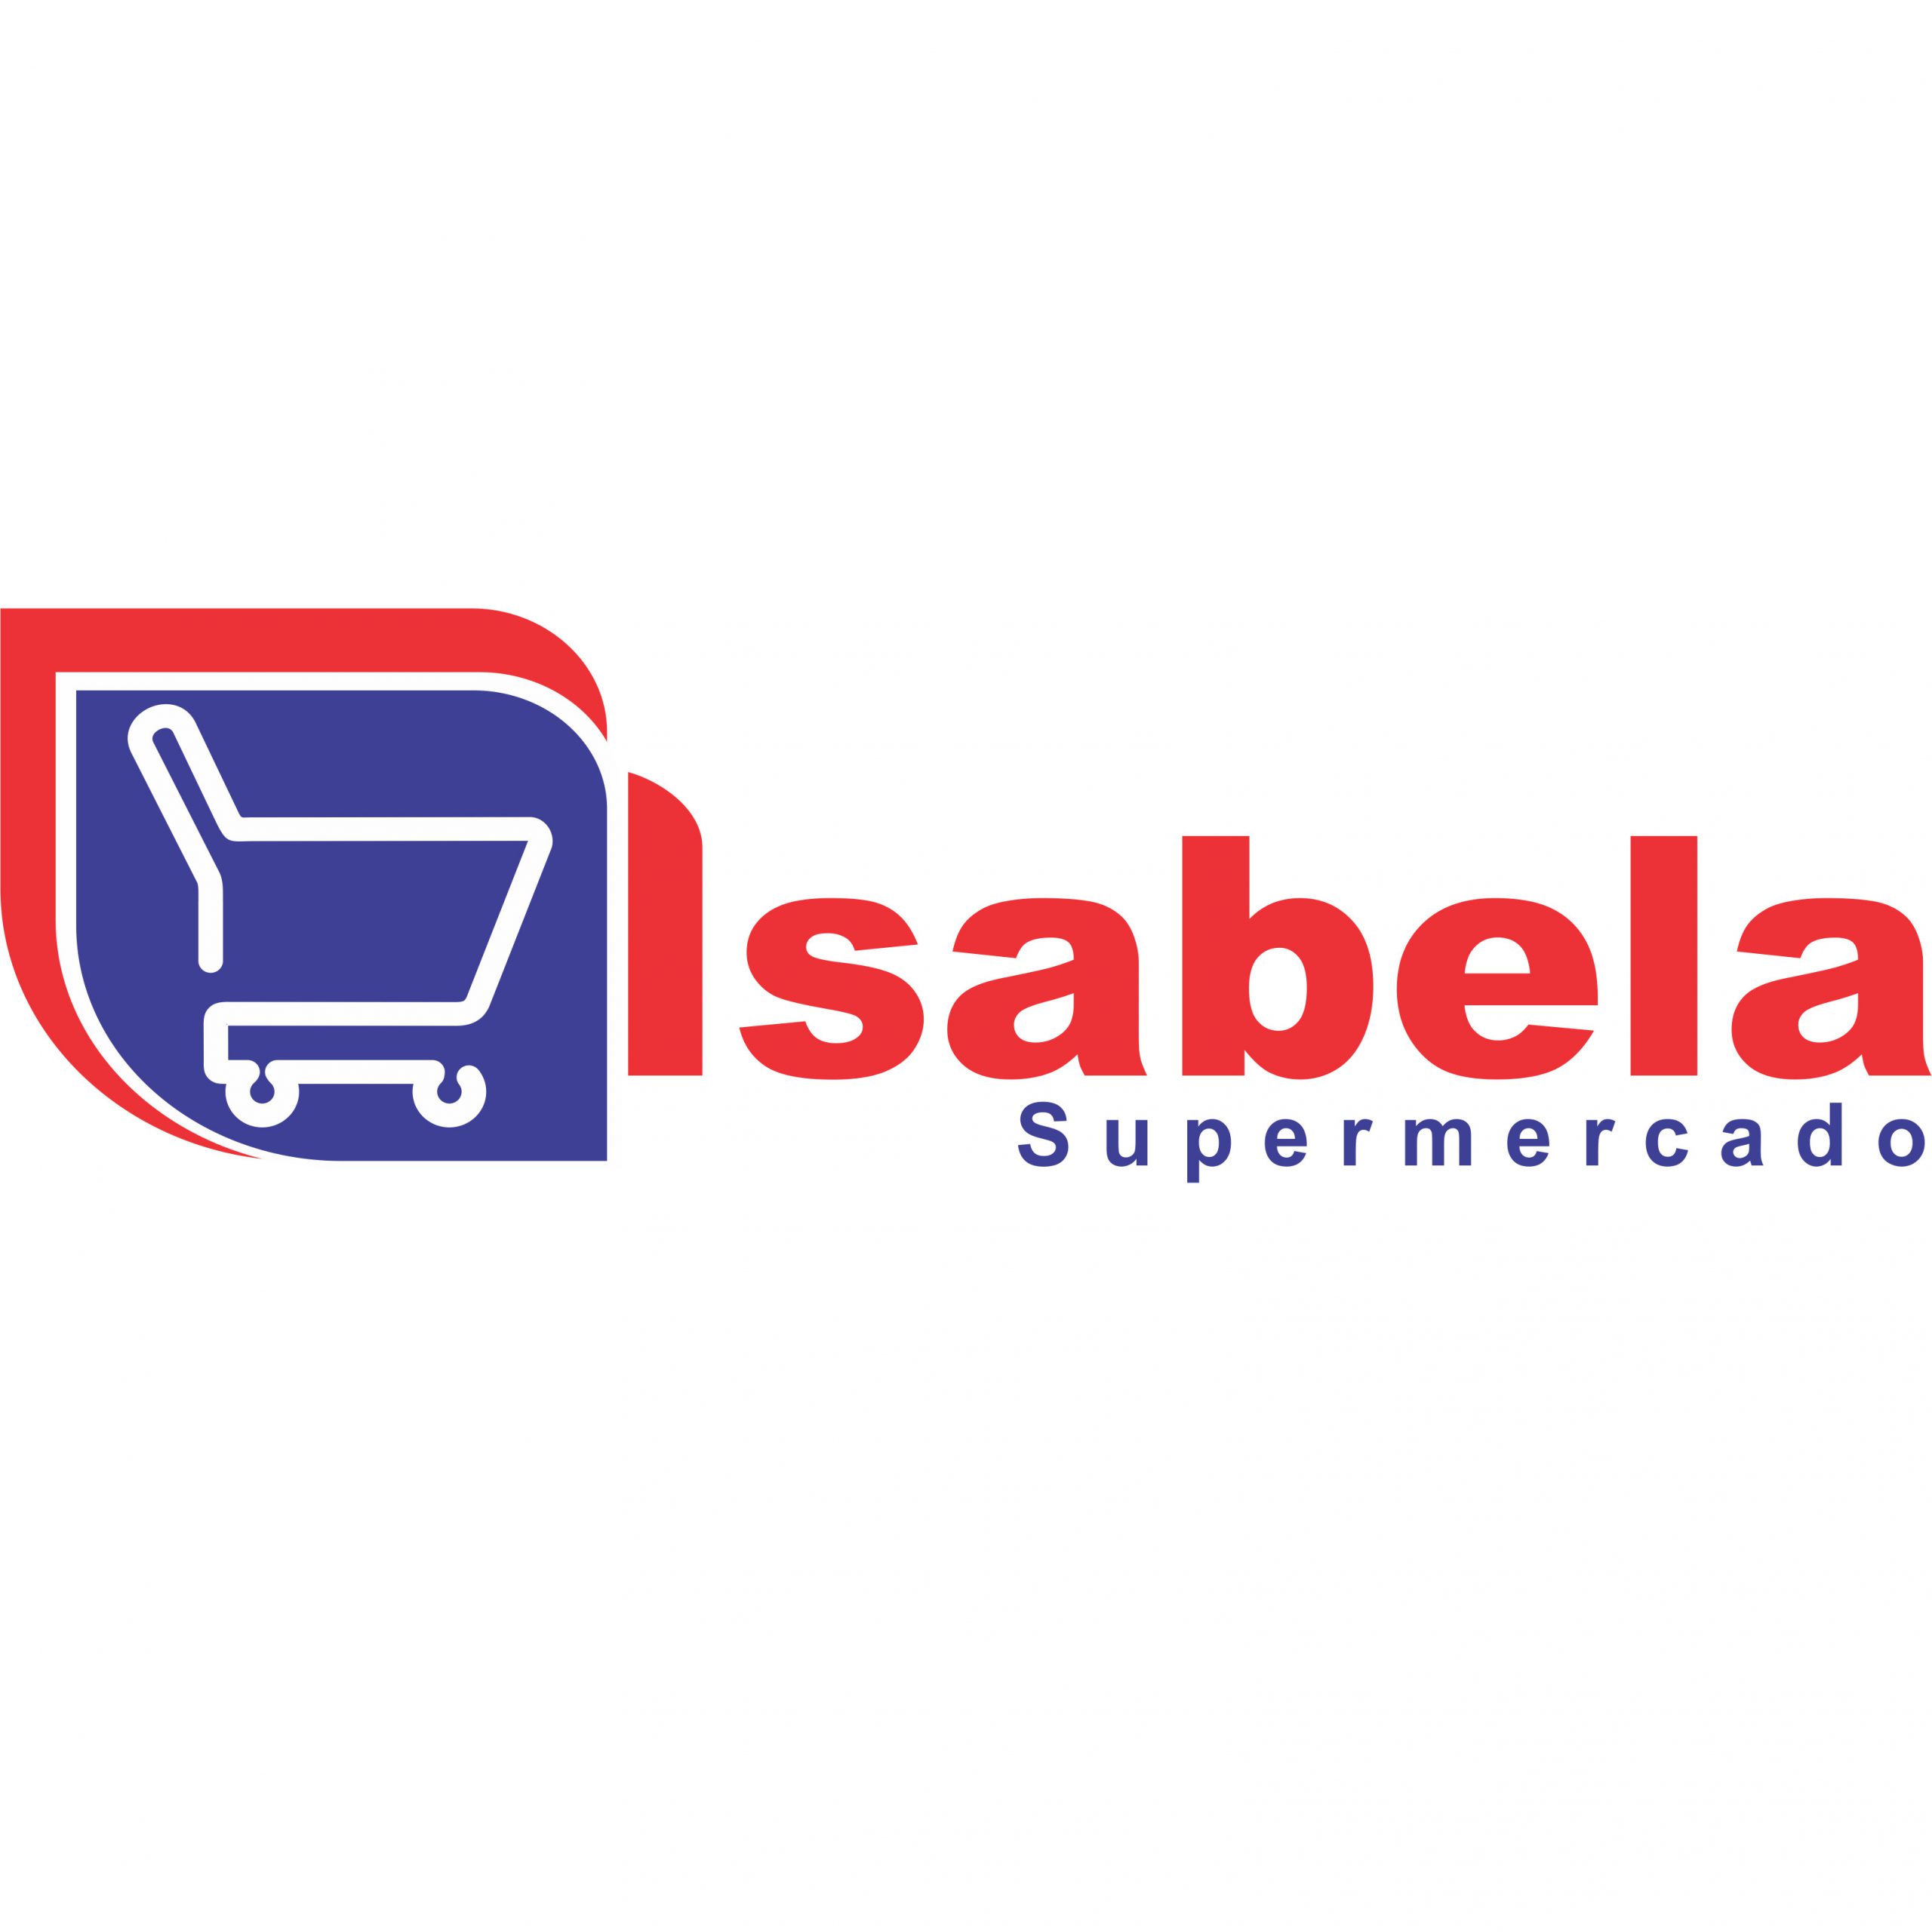 Supermercado Isabela